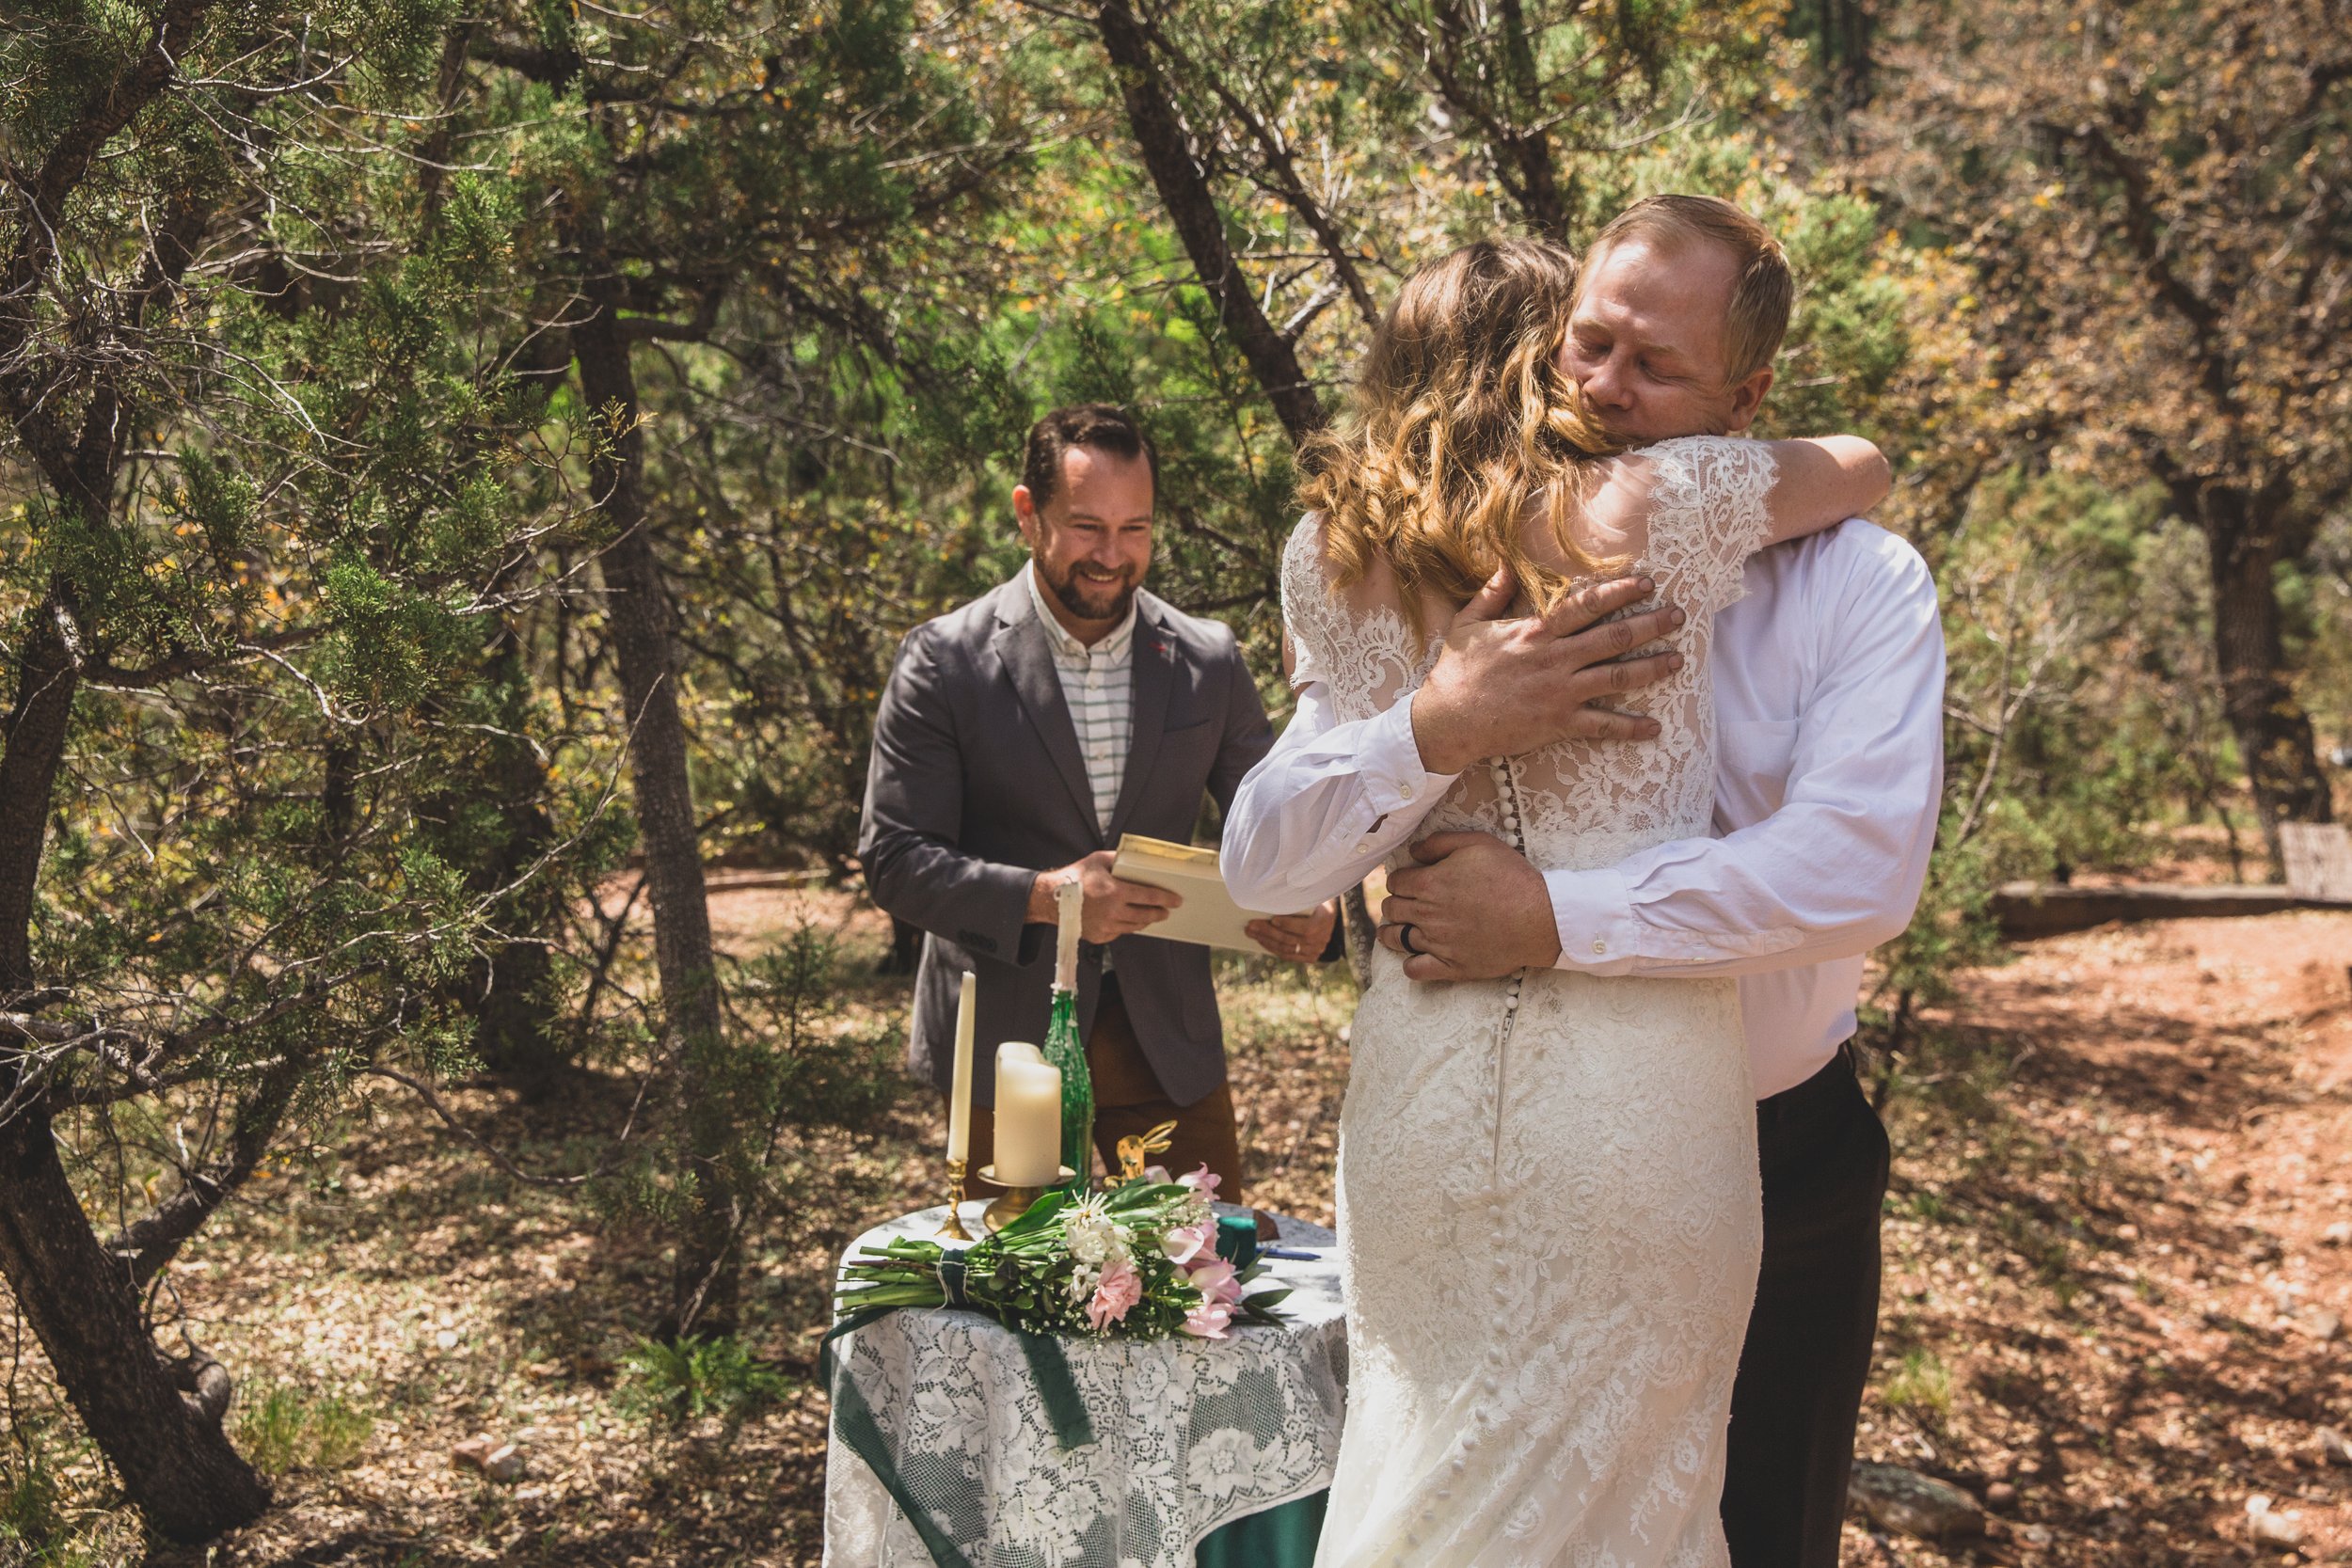 Newlyweds on their wedding day at their high noon desert elopement in Payson, Arizona by Arizona Elopement Photographer Jennifer Lind Schutsky.